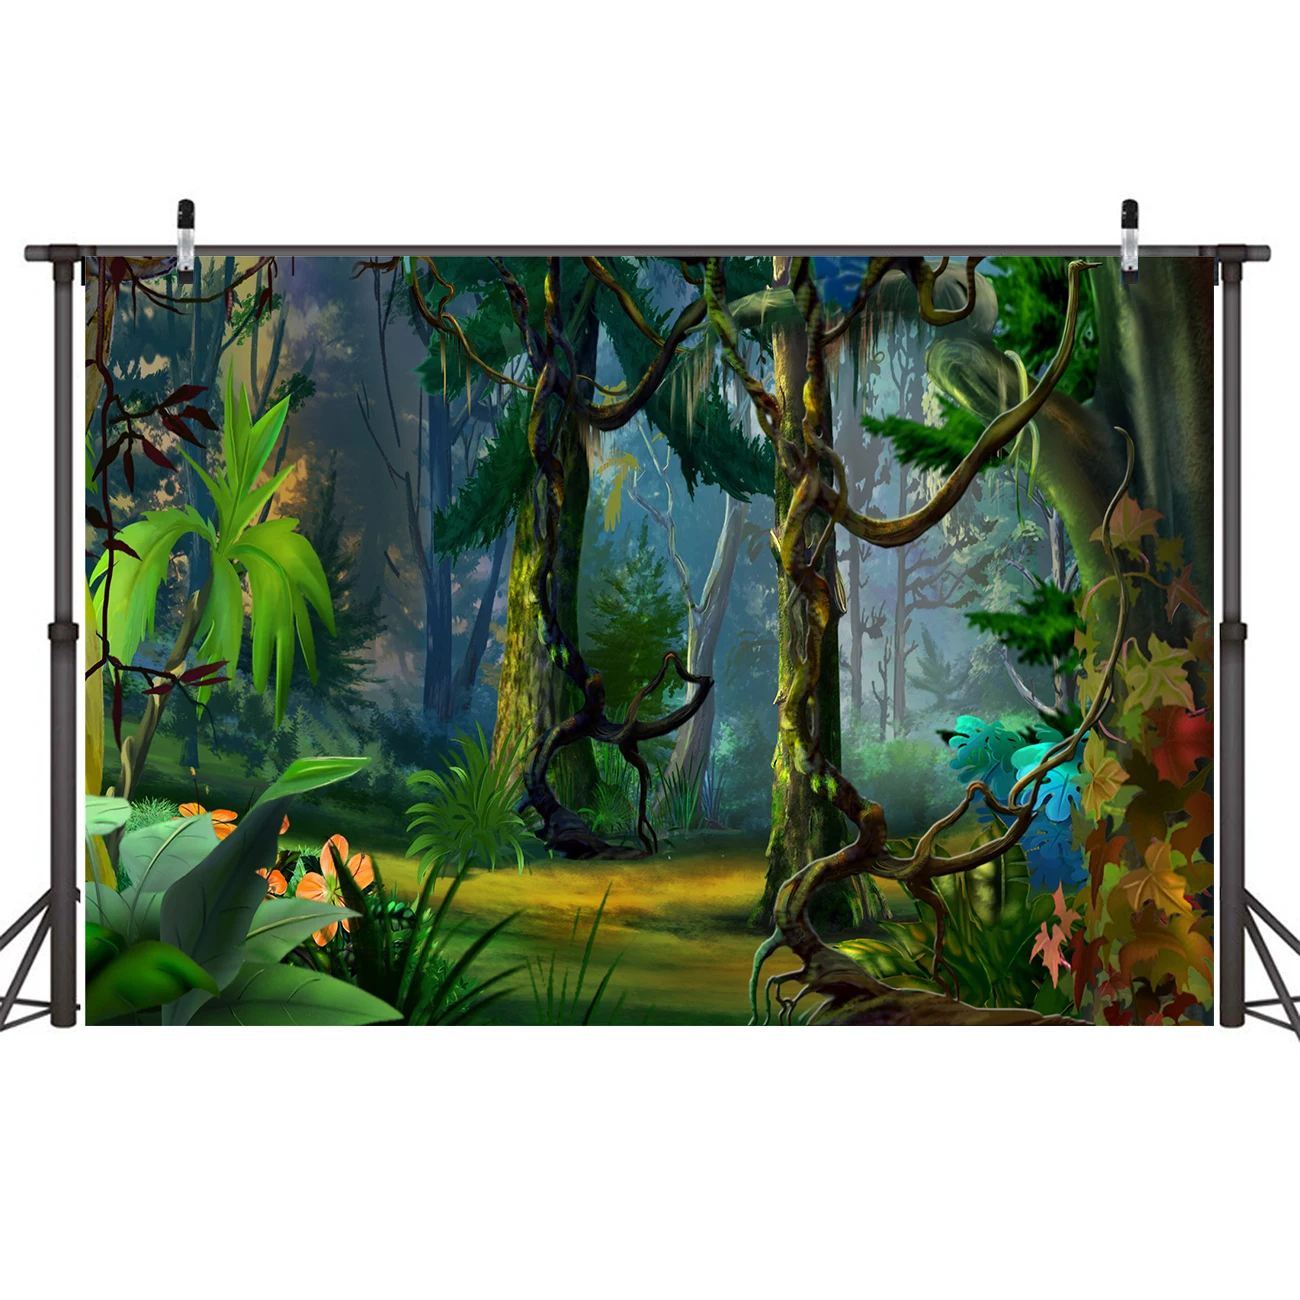 

Customized Birthday Backdrop Magic Tree Horrifying Forest Jungle Fantasy Studio Photography Background Party Table Banner Decor